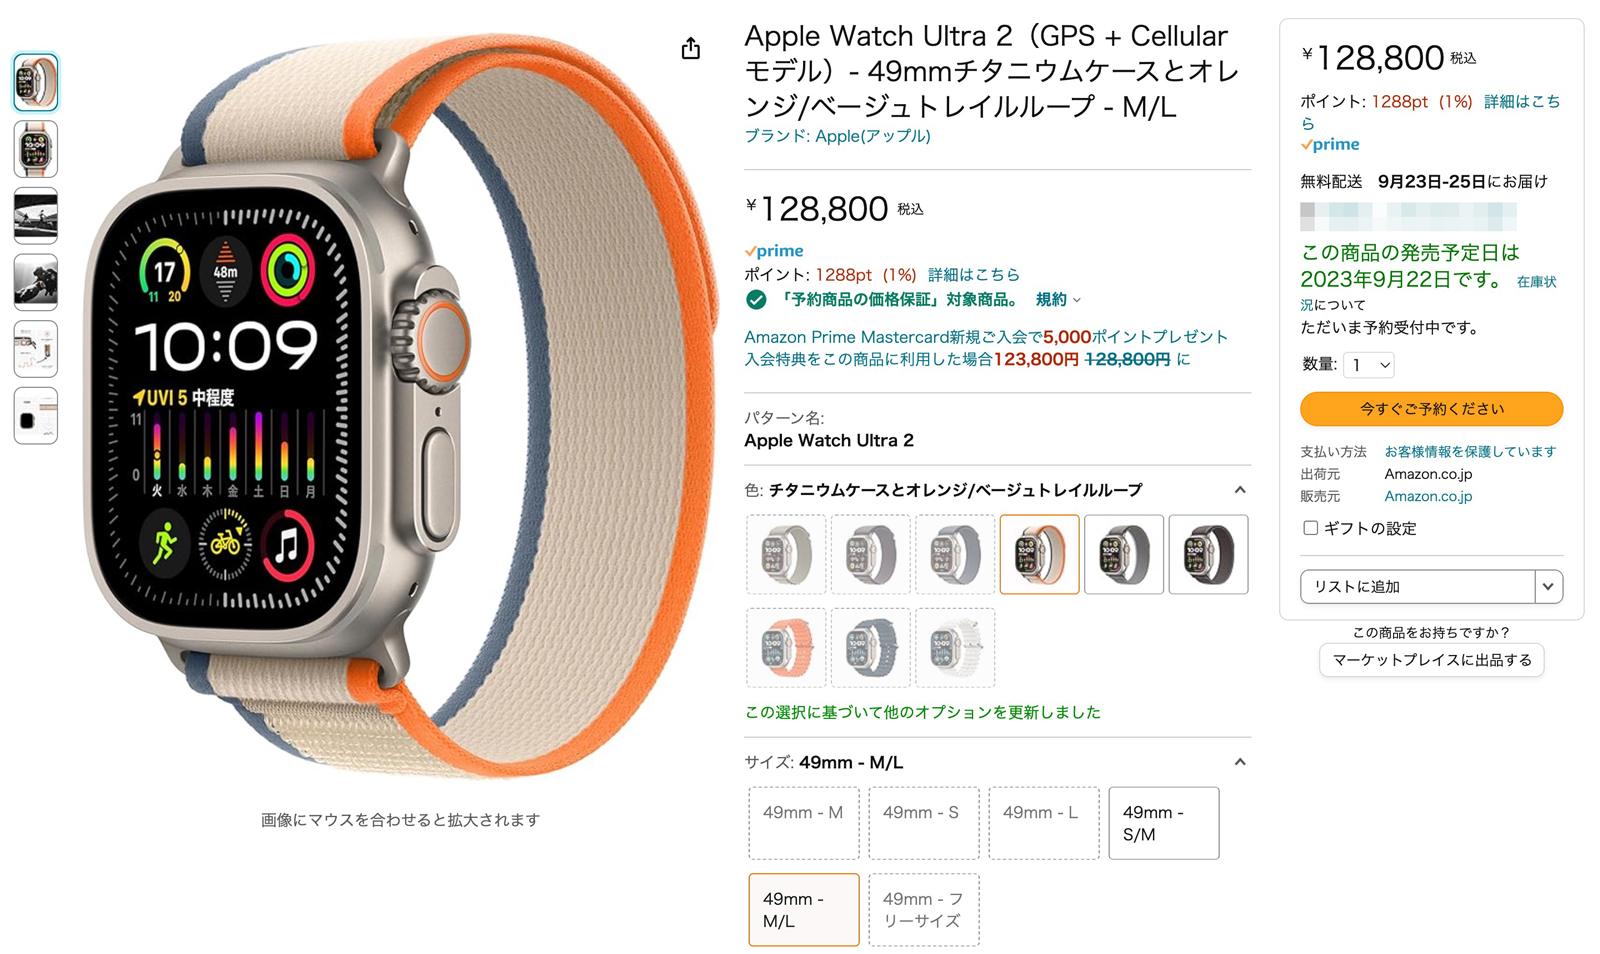 Apple Watch ultra 2 on amazon